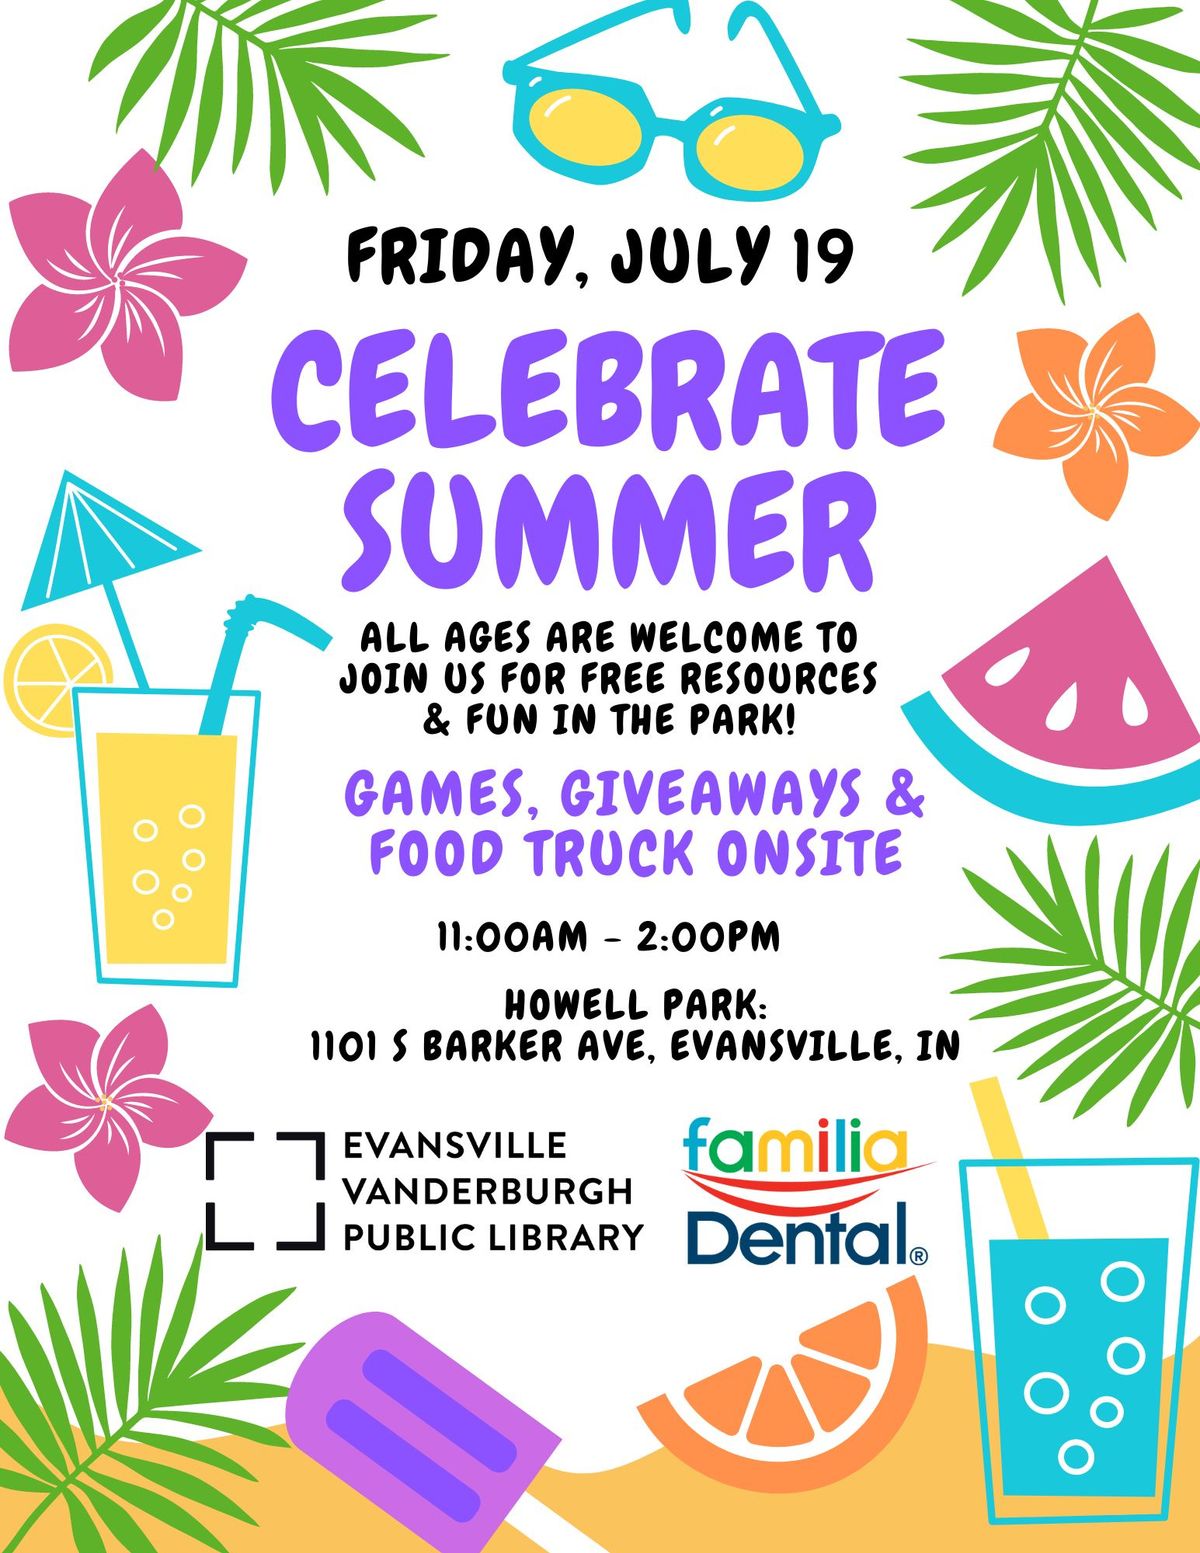 Celebrate Summer Community Resource Fair in Evansville, IN